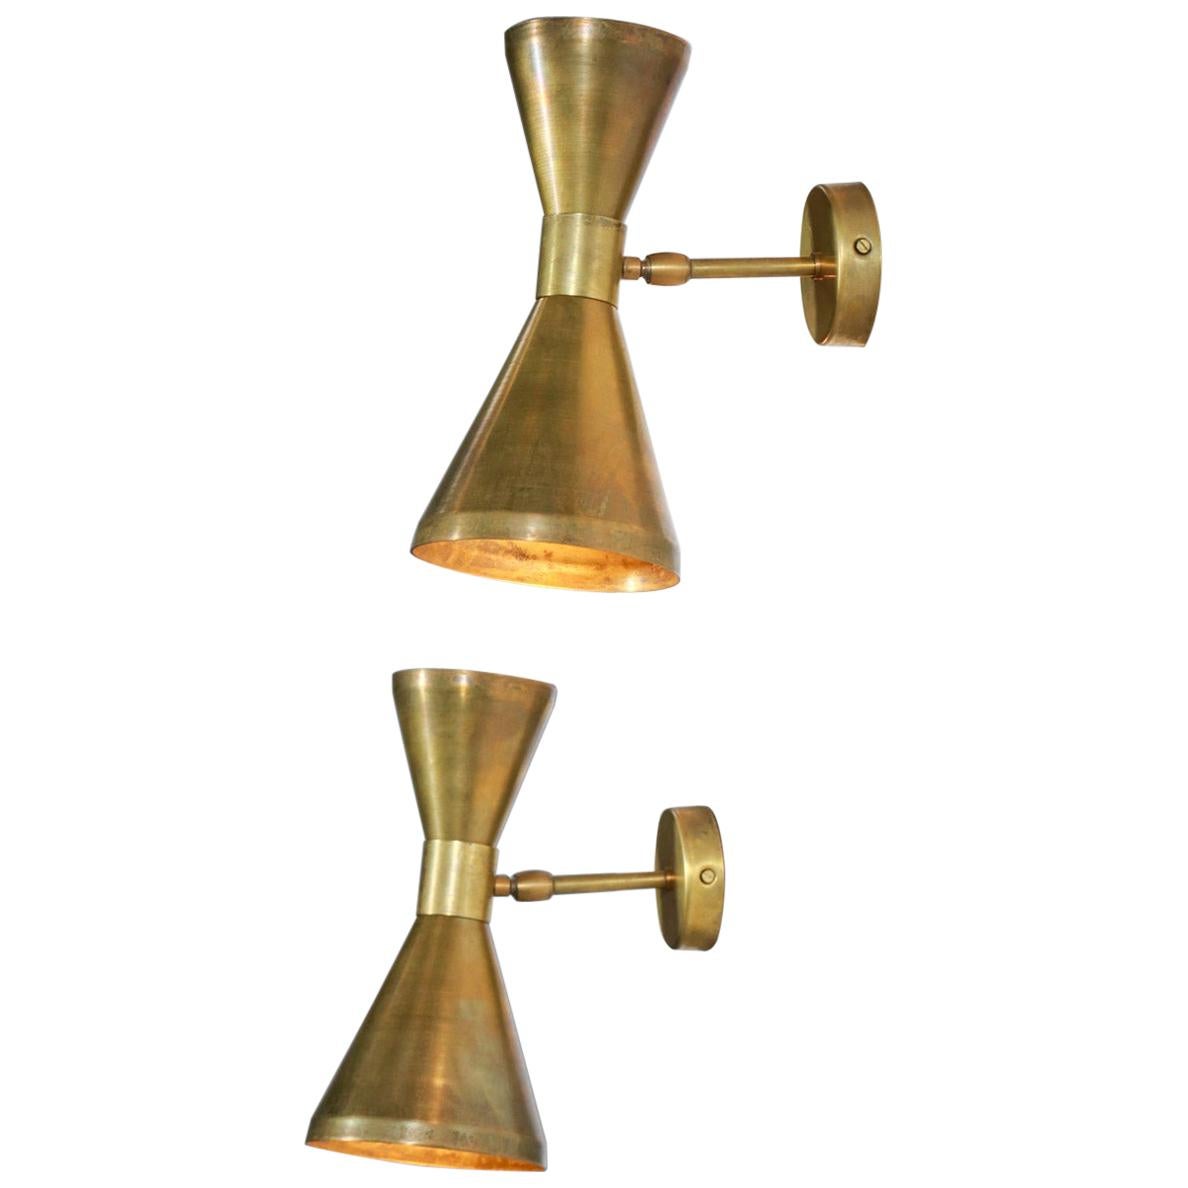 Pair of Contemporary Italian Wall Lights "Livia" in Style of Stilnovo Brass